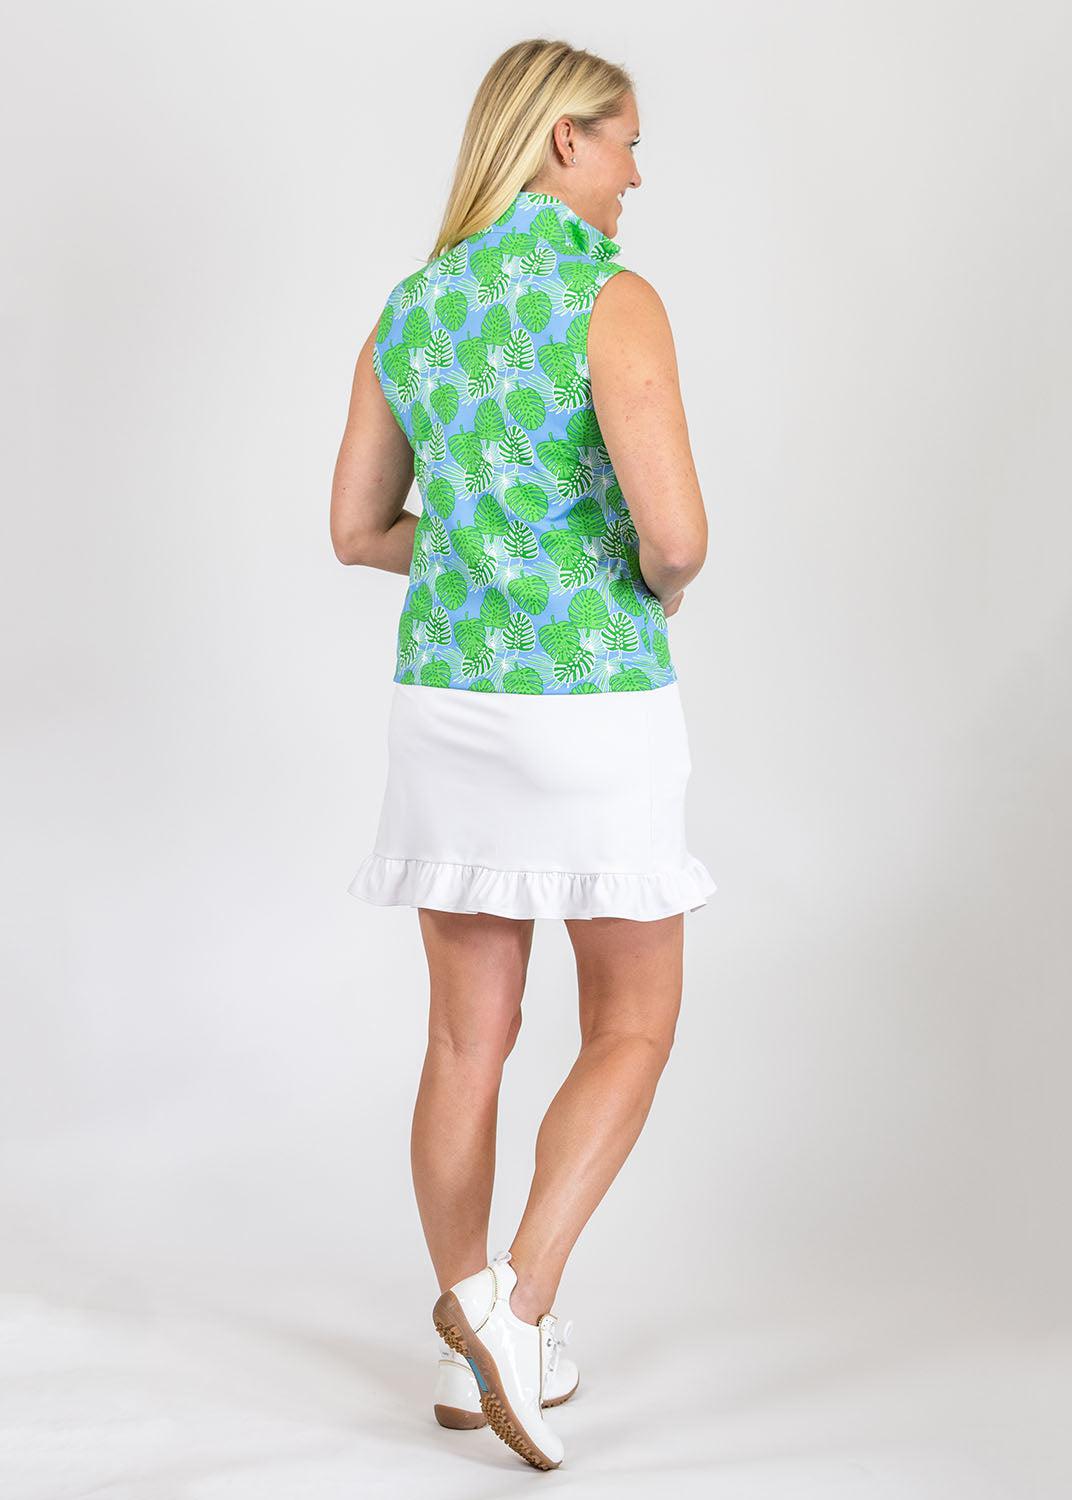 Blue & Green Britt Sleevless Top in a Palm Print 2